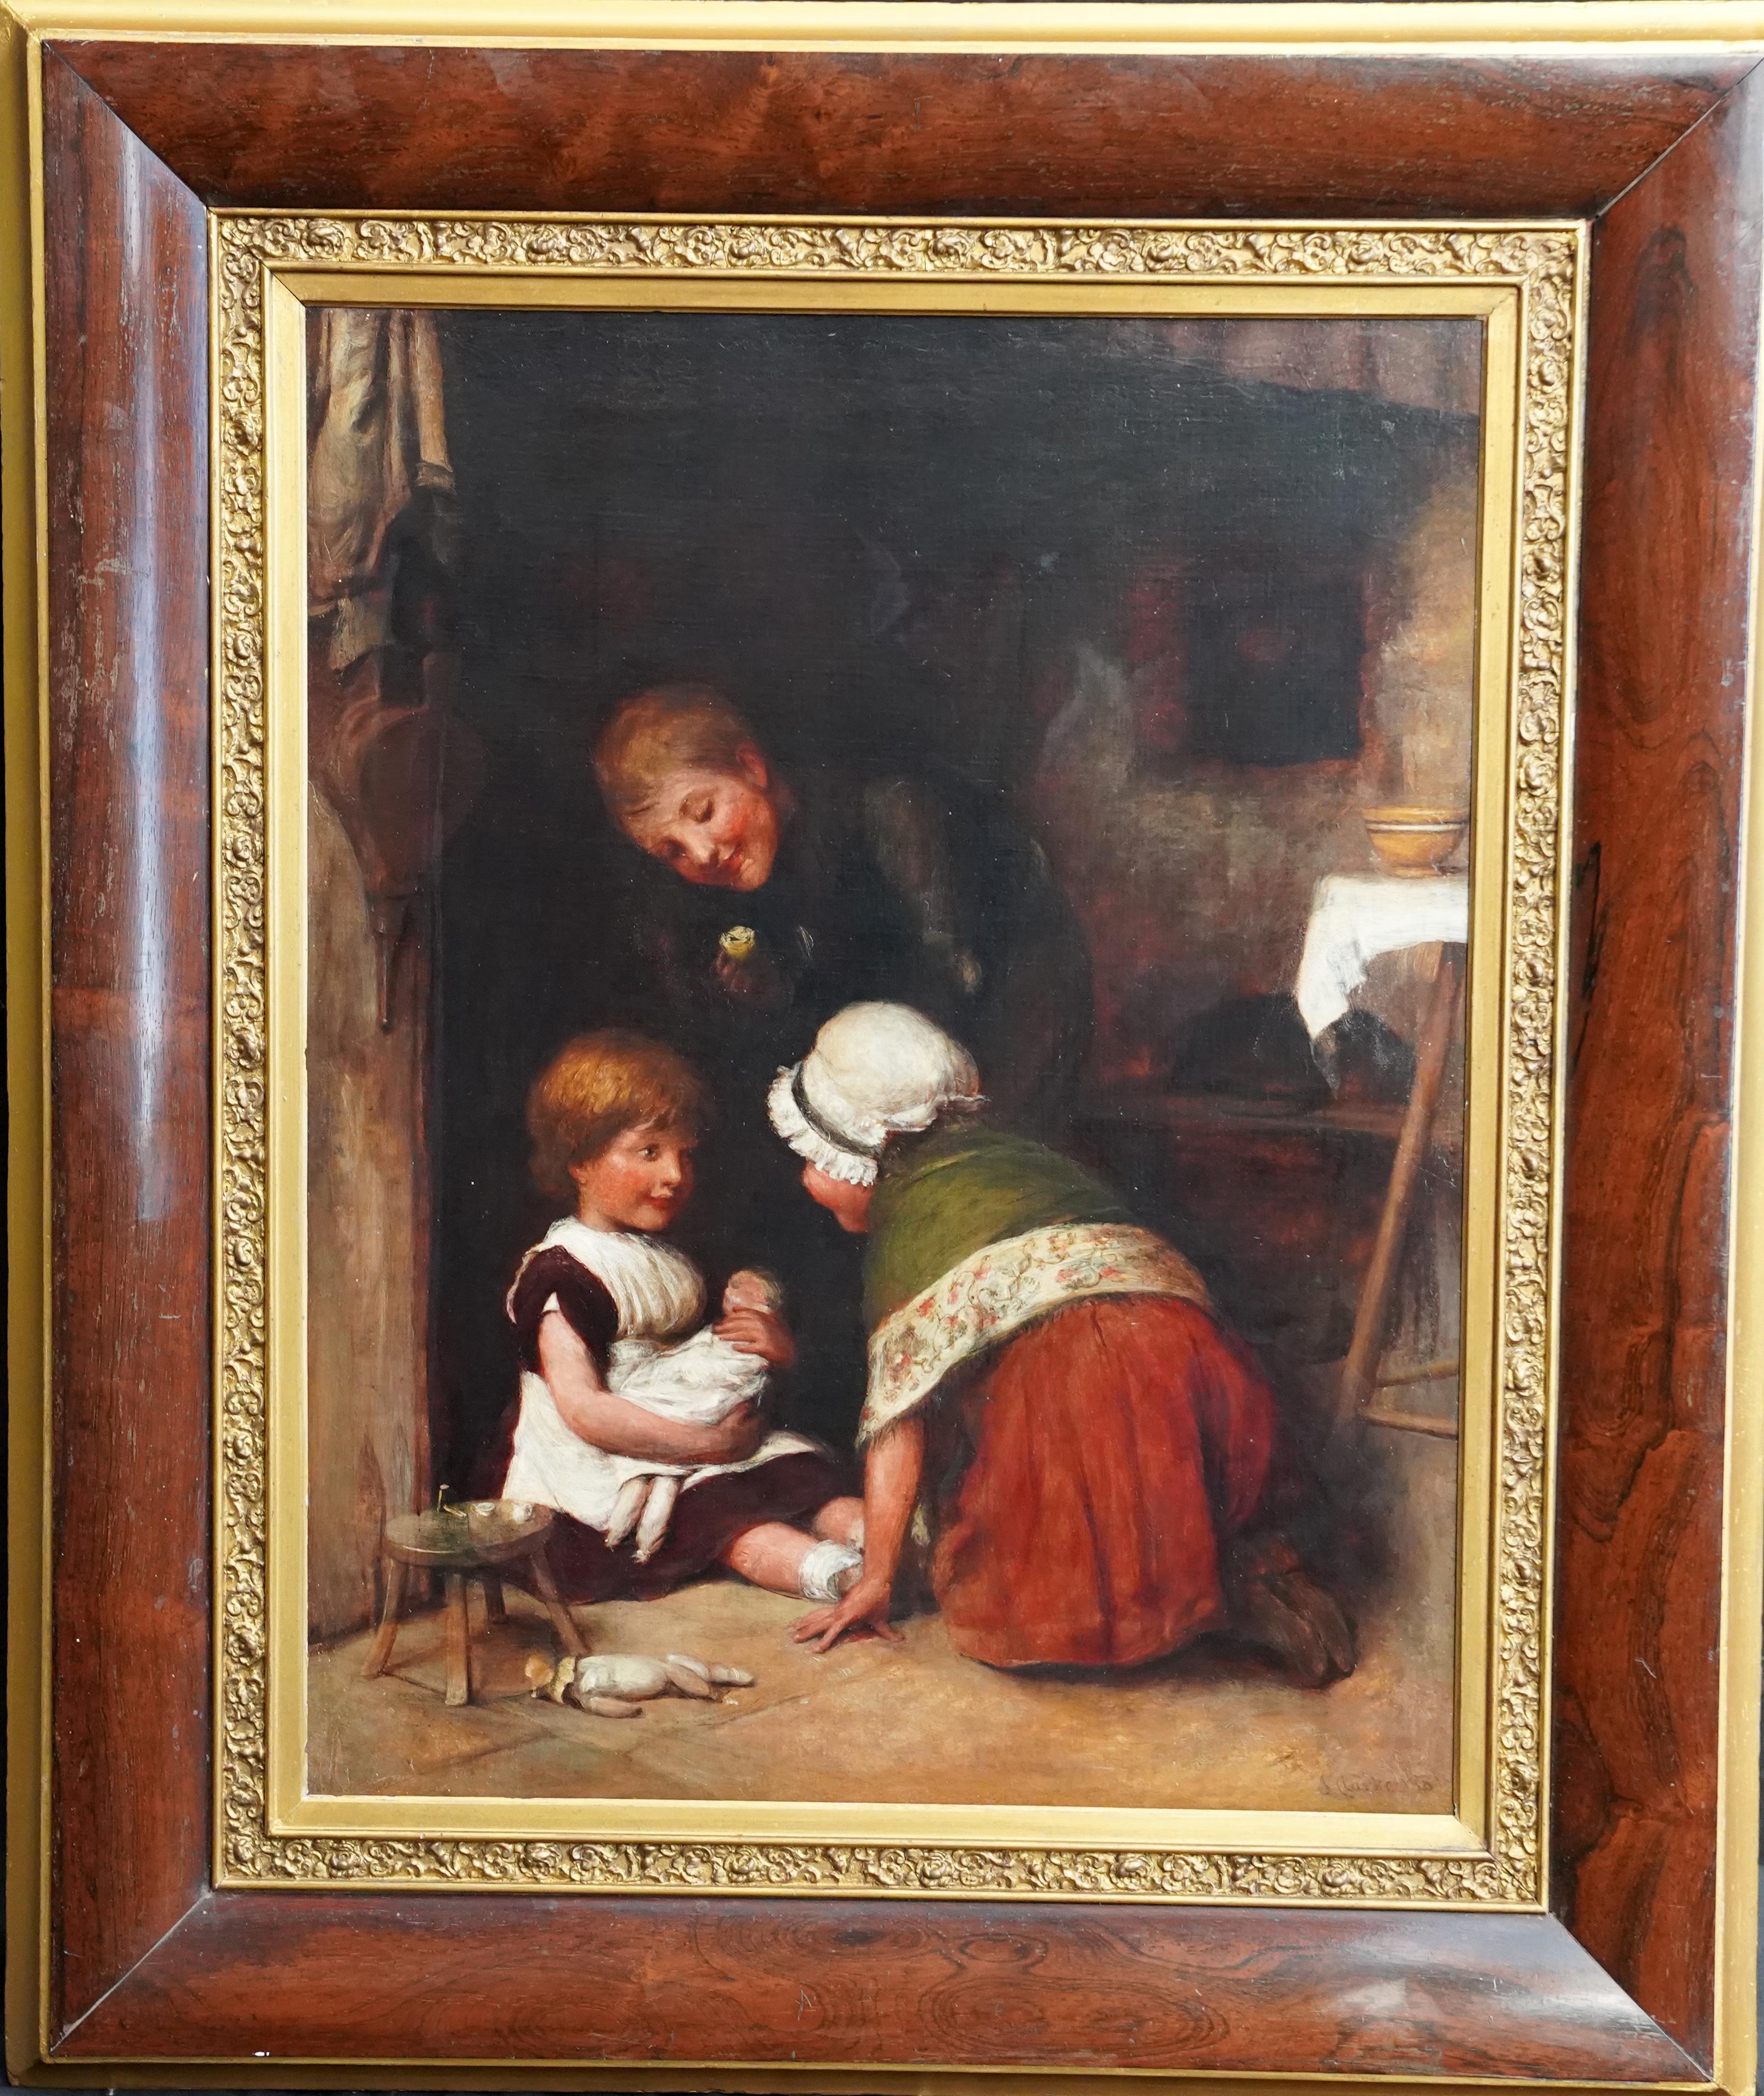 Joseph Clark Portrait Painting - Portrait of Children at Play - British Victorian Genre art oil painting interior